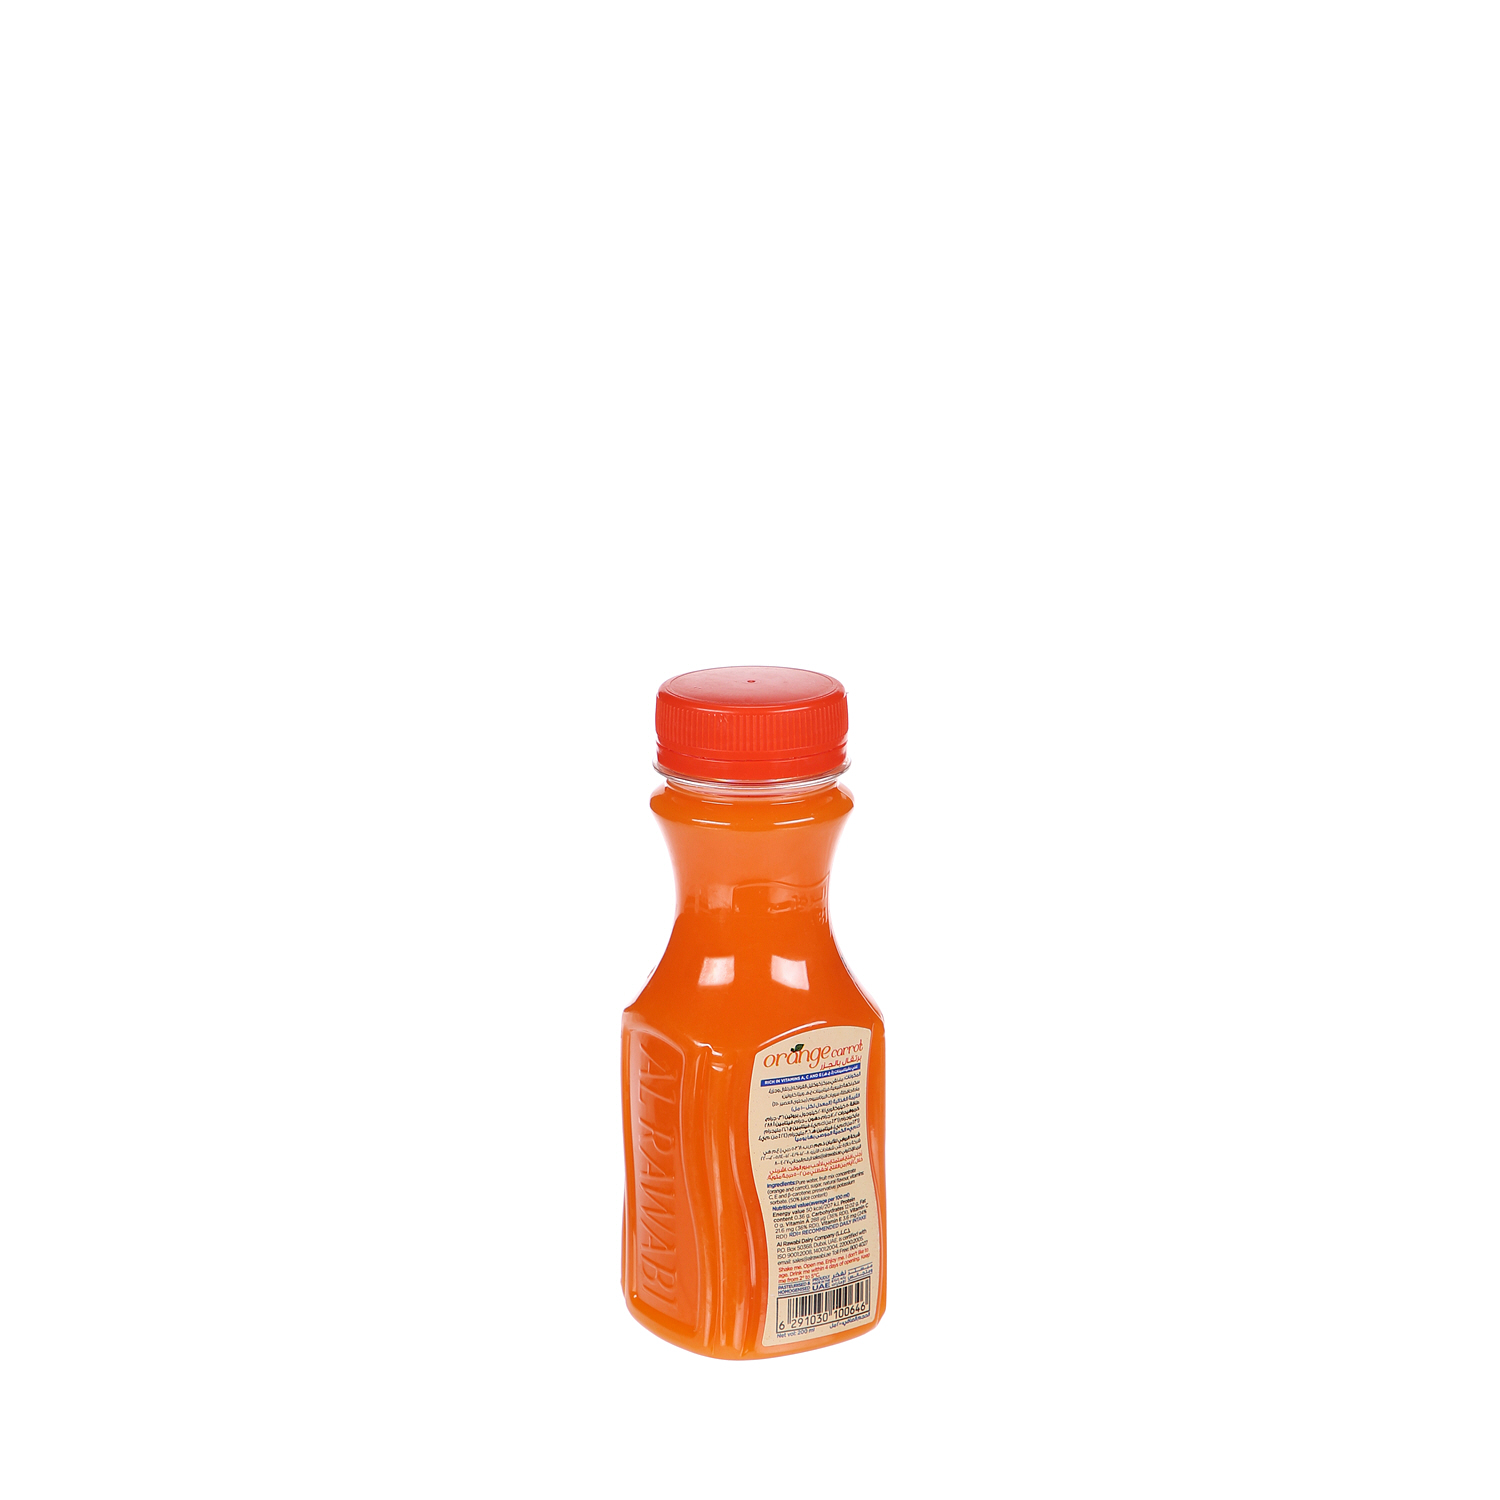 Al Rawabi Orange & Carrot Juice 200ml